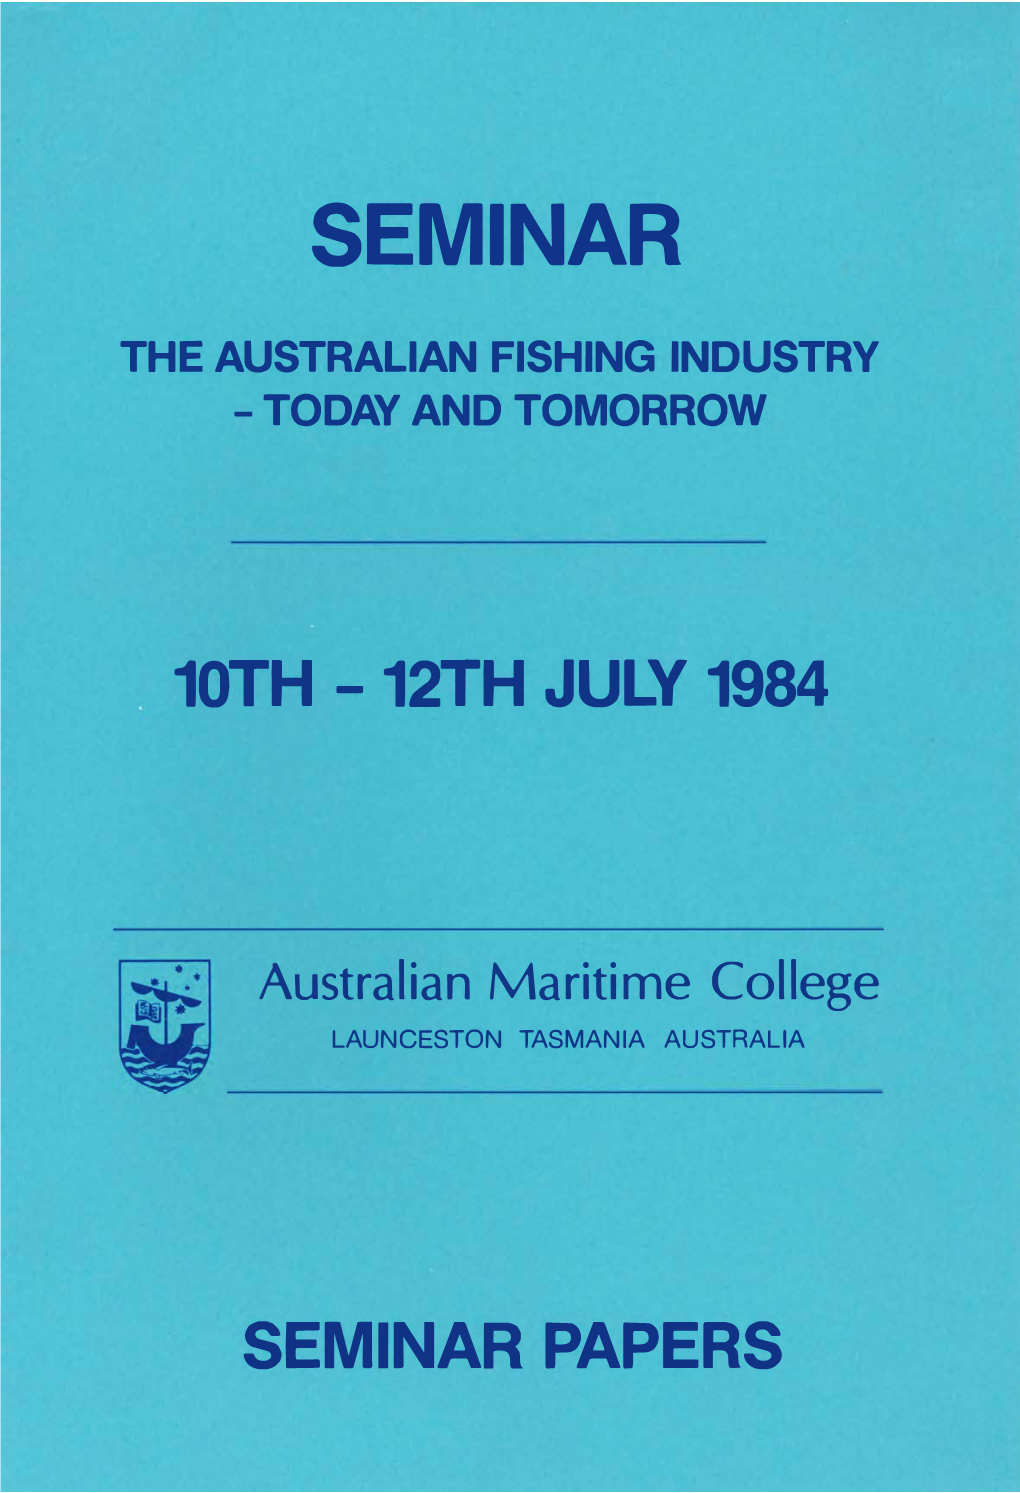 Seminar the Australian Fishing Industry